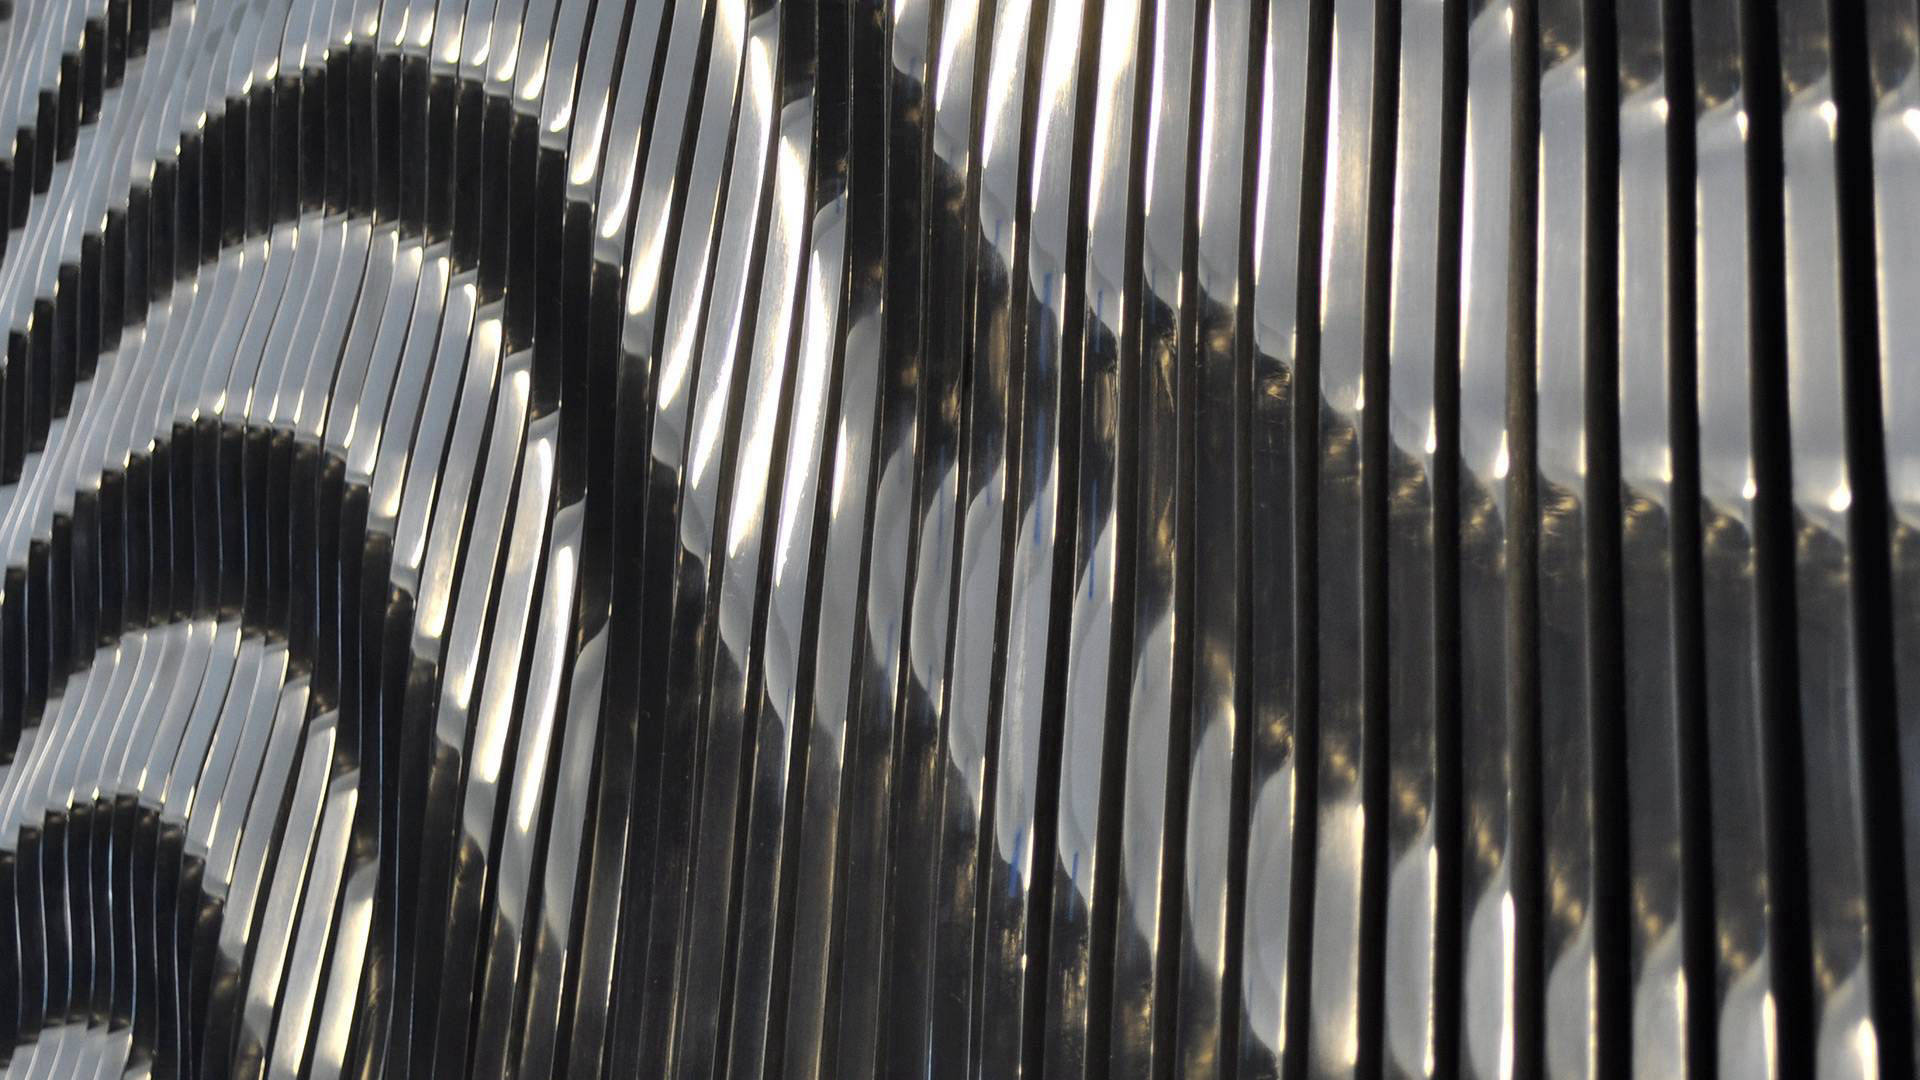 Ripple - mirror polished aluminum public art sculpture by Heath Satow Los Angeles CA